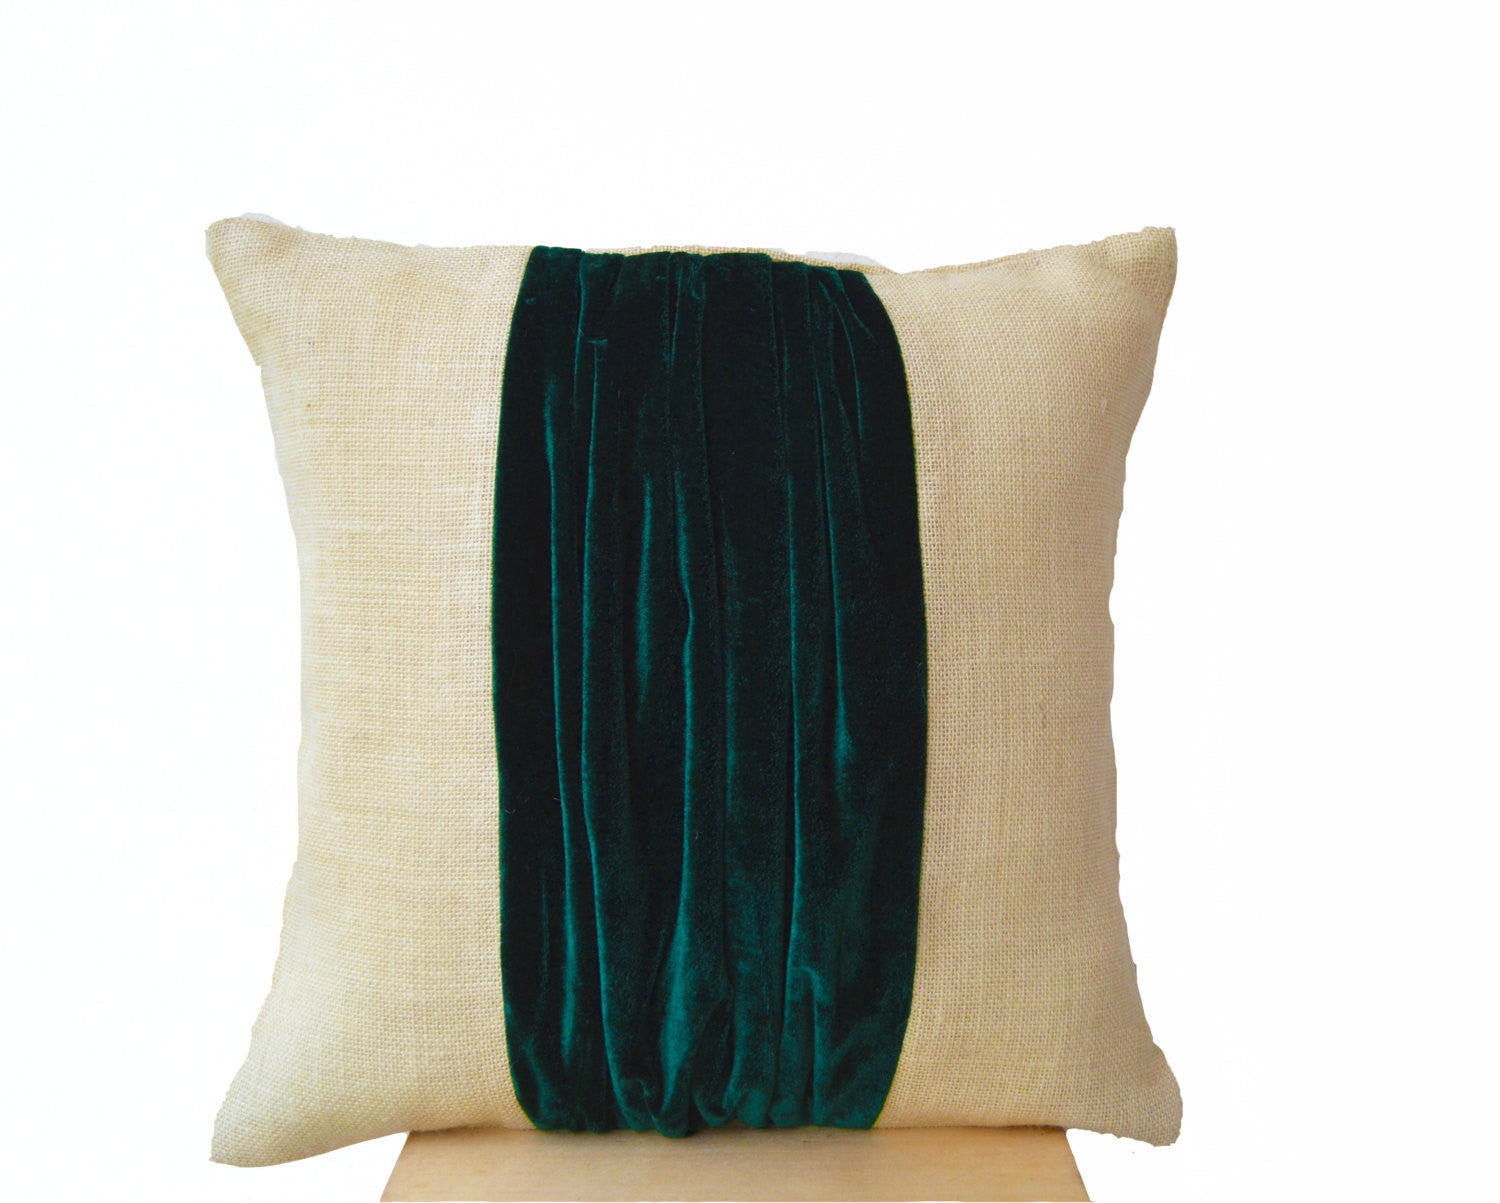 Handmade burlap throw pillow with teal velvet color block